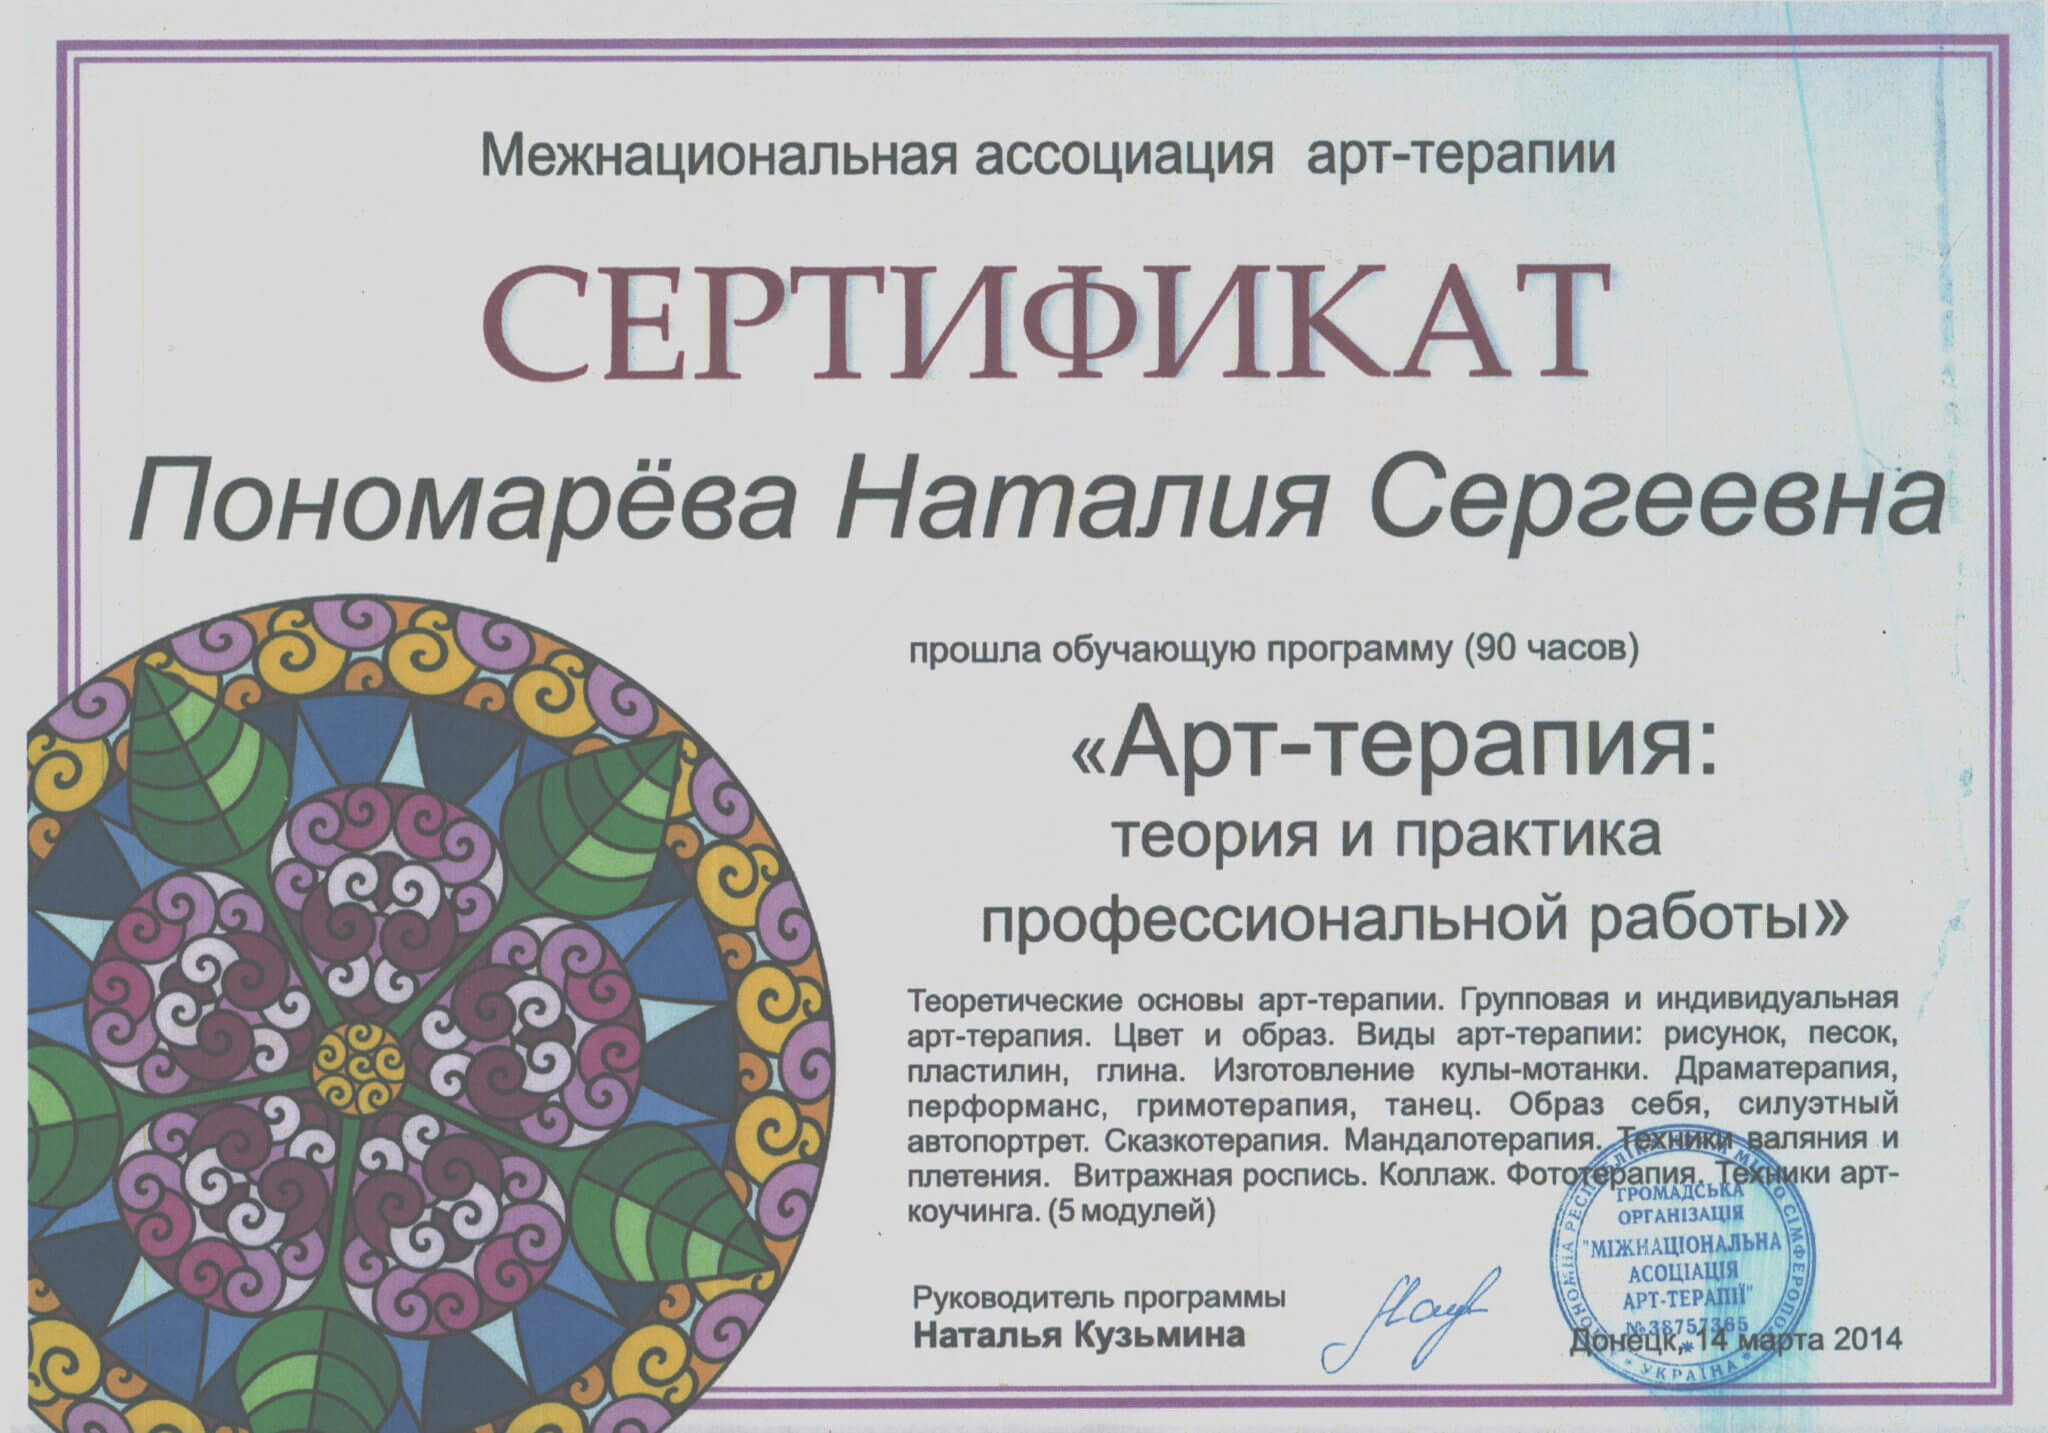 Наталия Пономарева сертификат